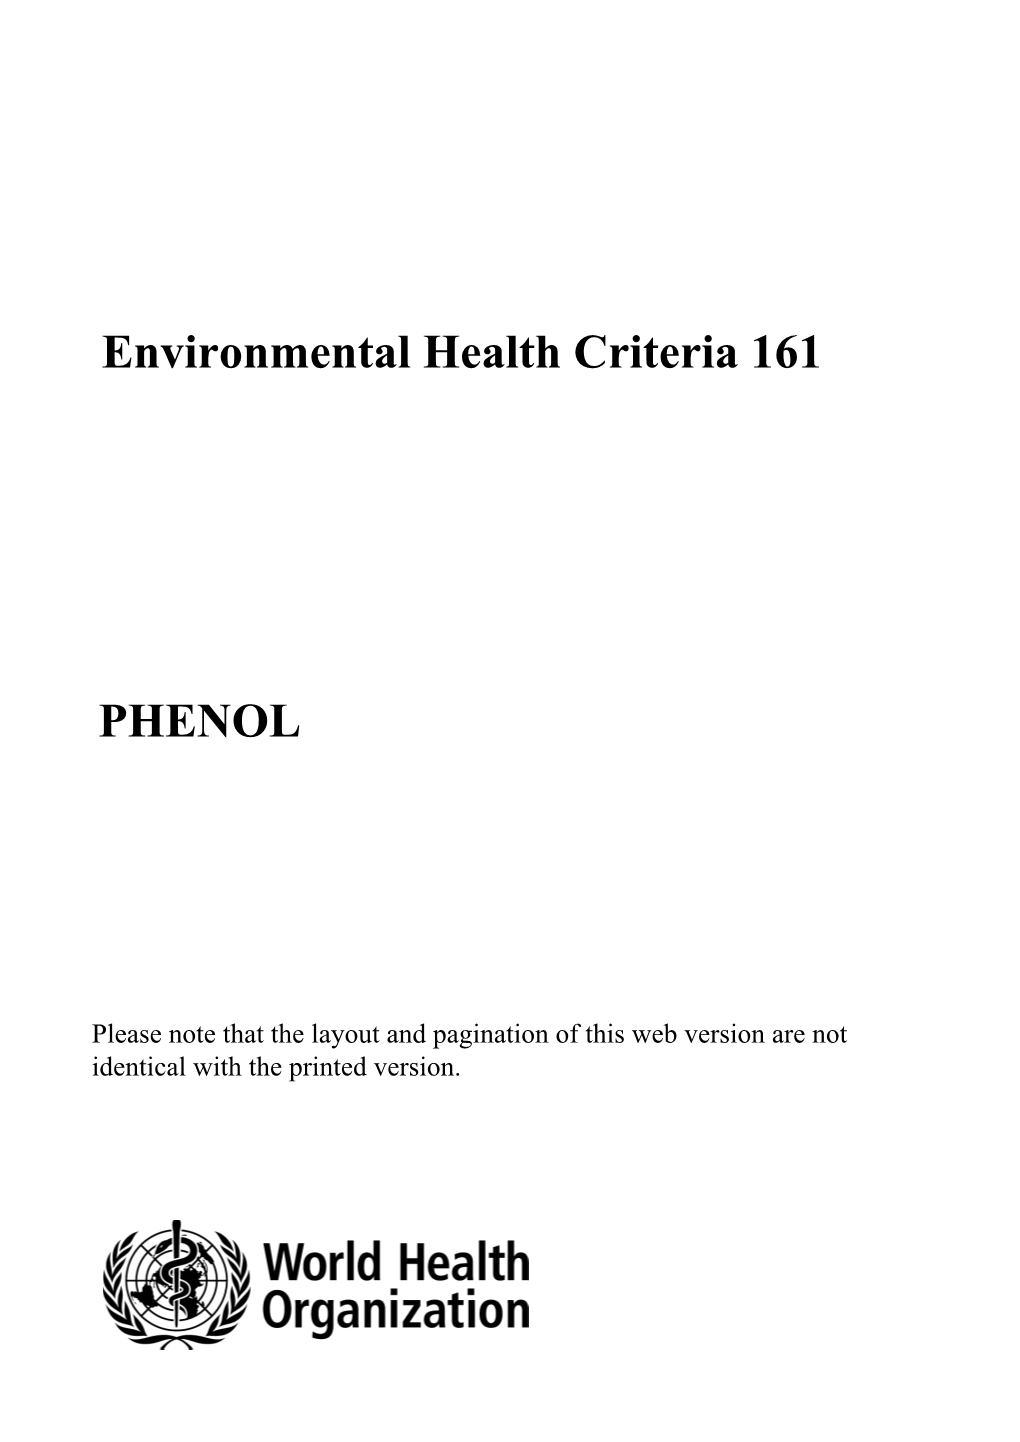 Environmental Health Criteria 161 PHENOL